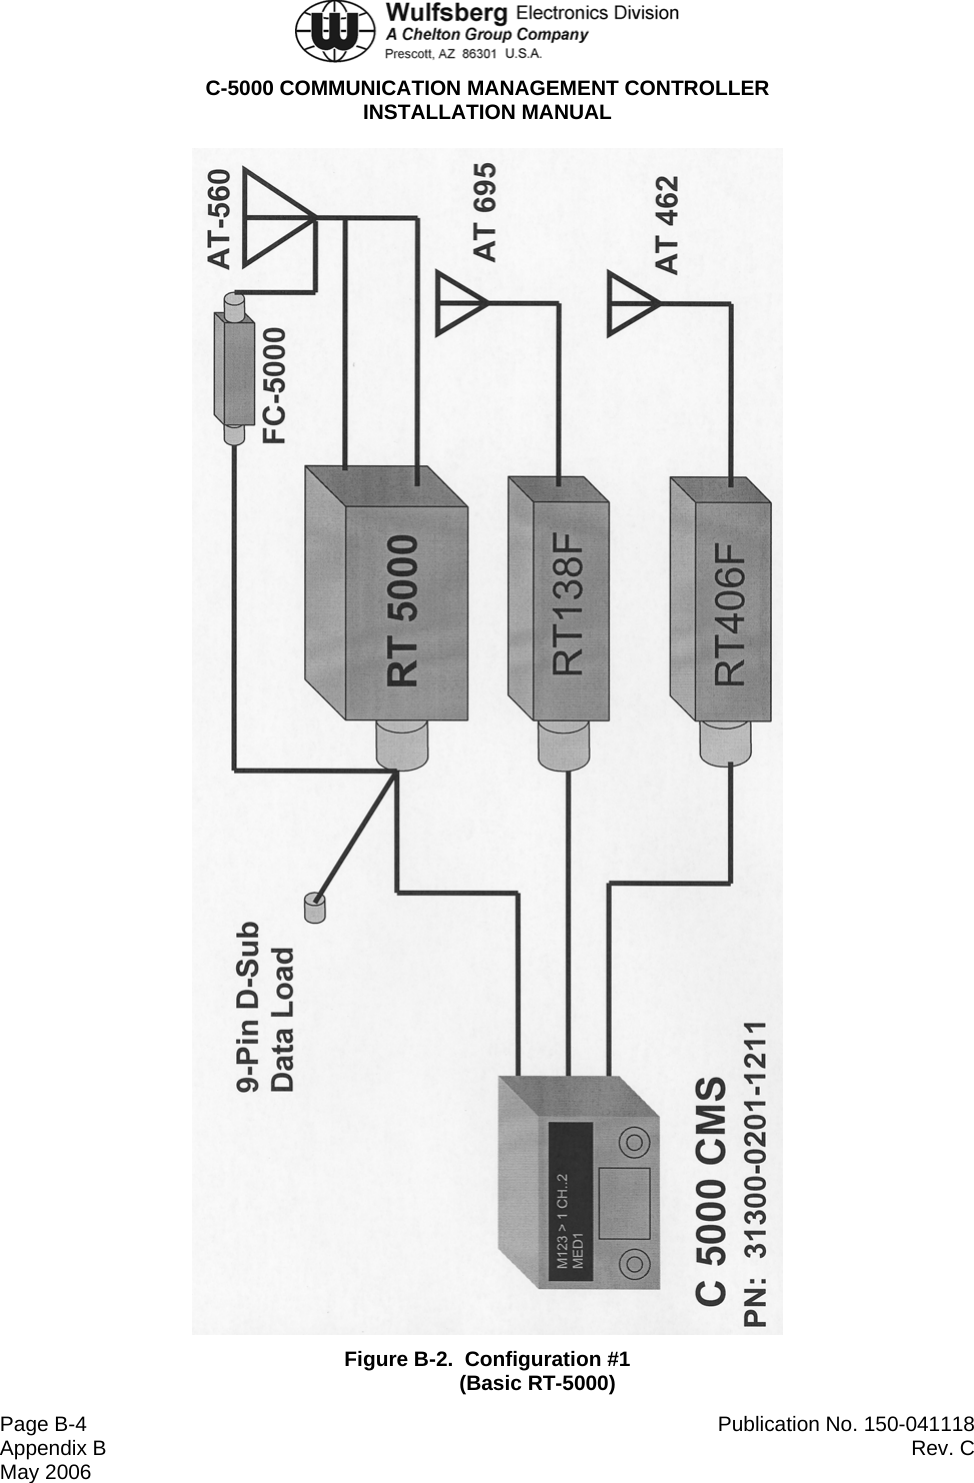  C-5000 COMMUNICATION MANAGEMENT CONTROLLER INSTALLATION MANUAL  Page B-4   Publication No. 150-041118 Appendix B  Rev. C  May 2006  Figure B-2.  Configuration #1 (Basic RT-5000) 